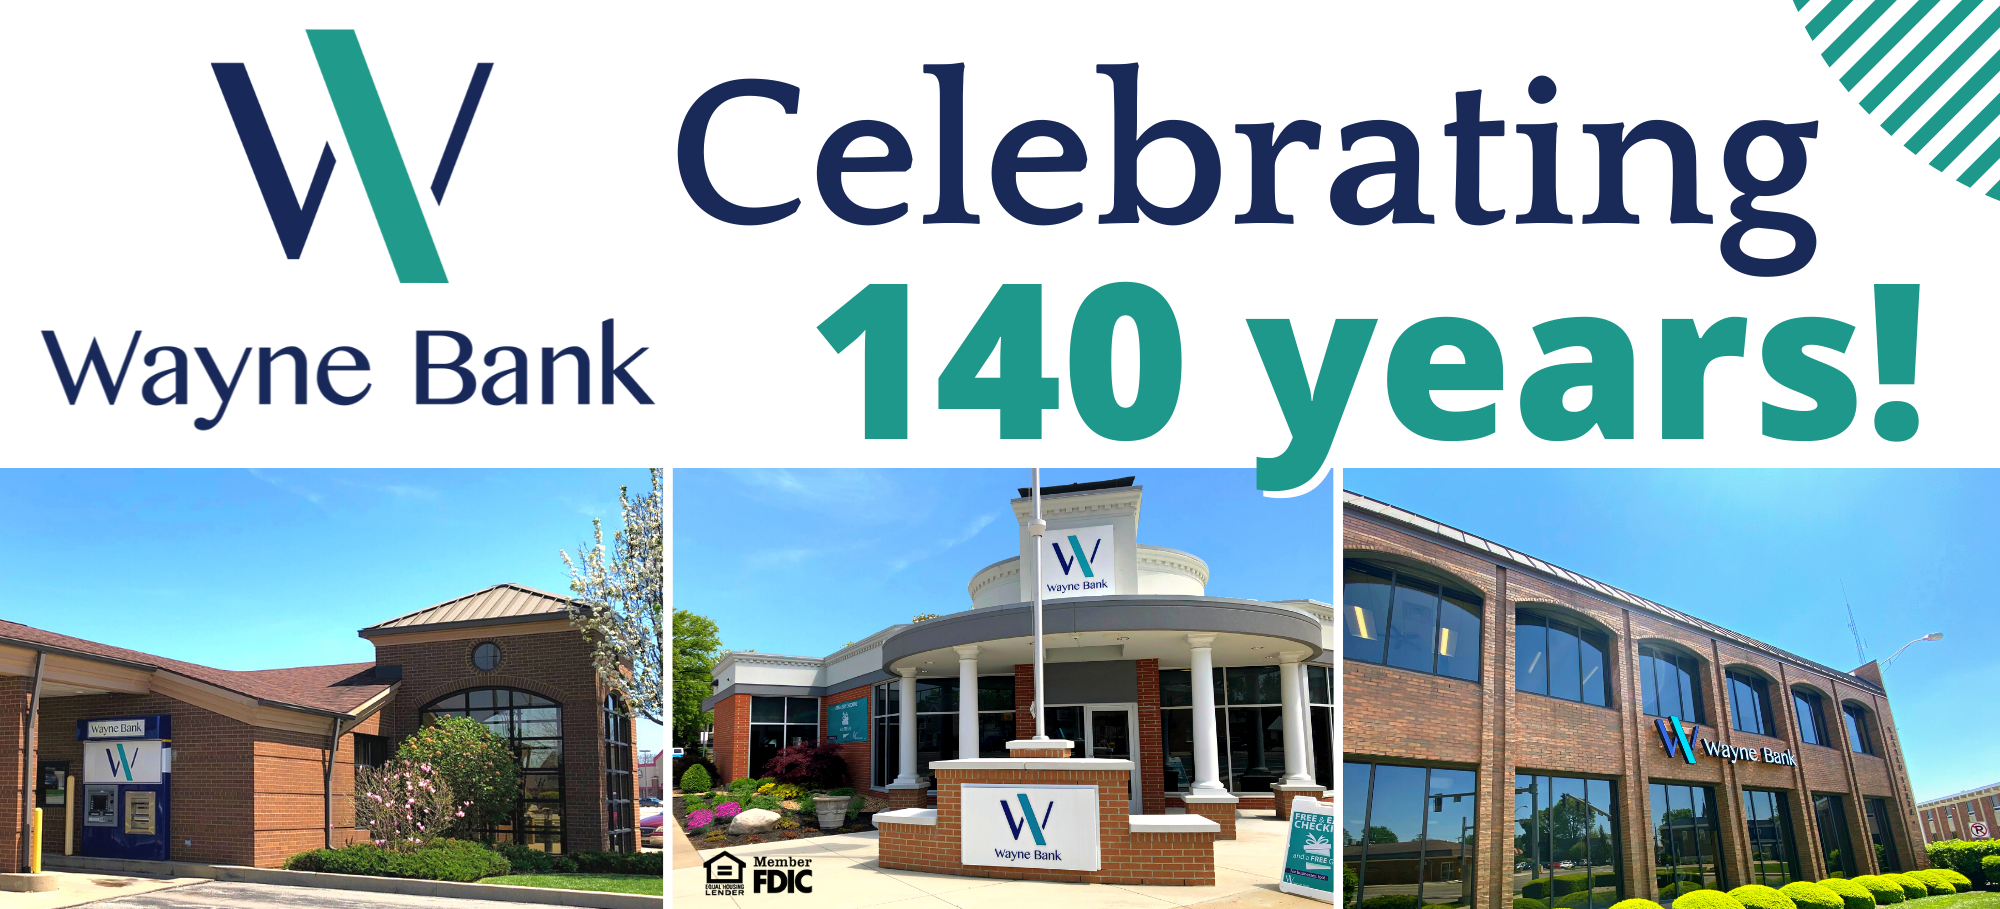 billboard design celebrating 140 years 3 bank branch buildings